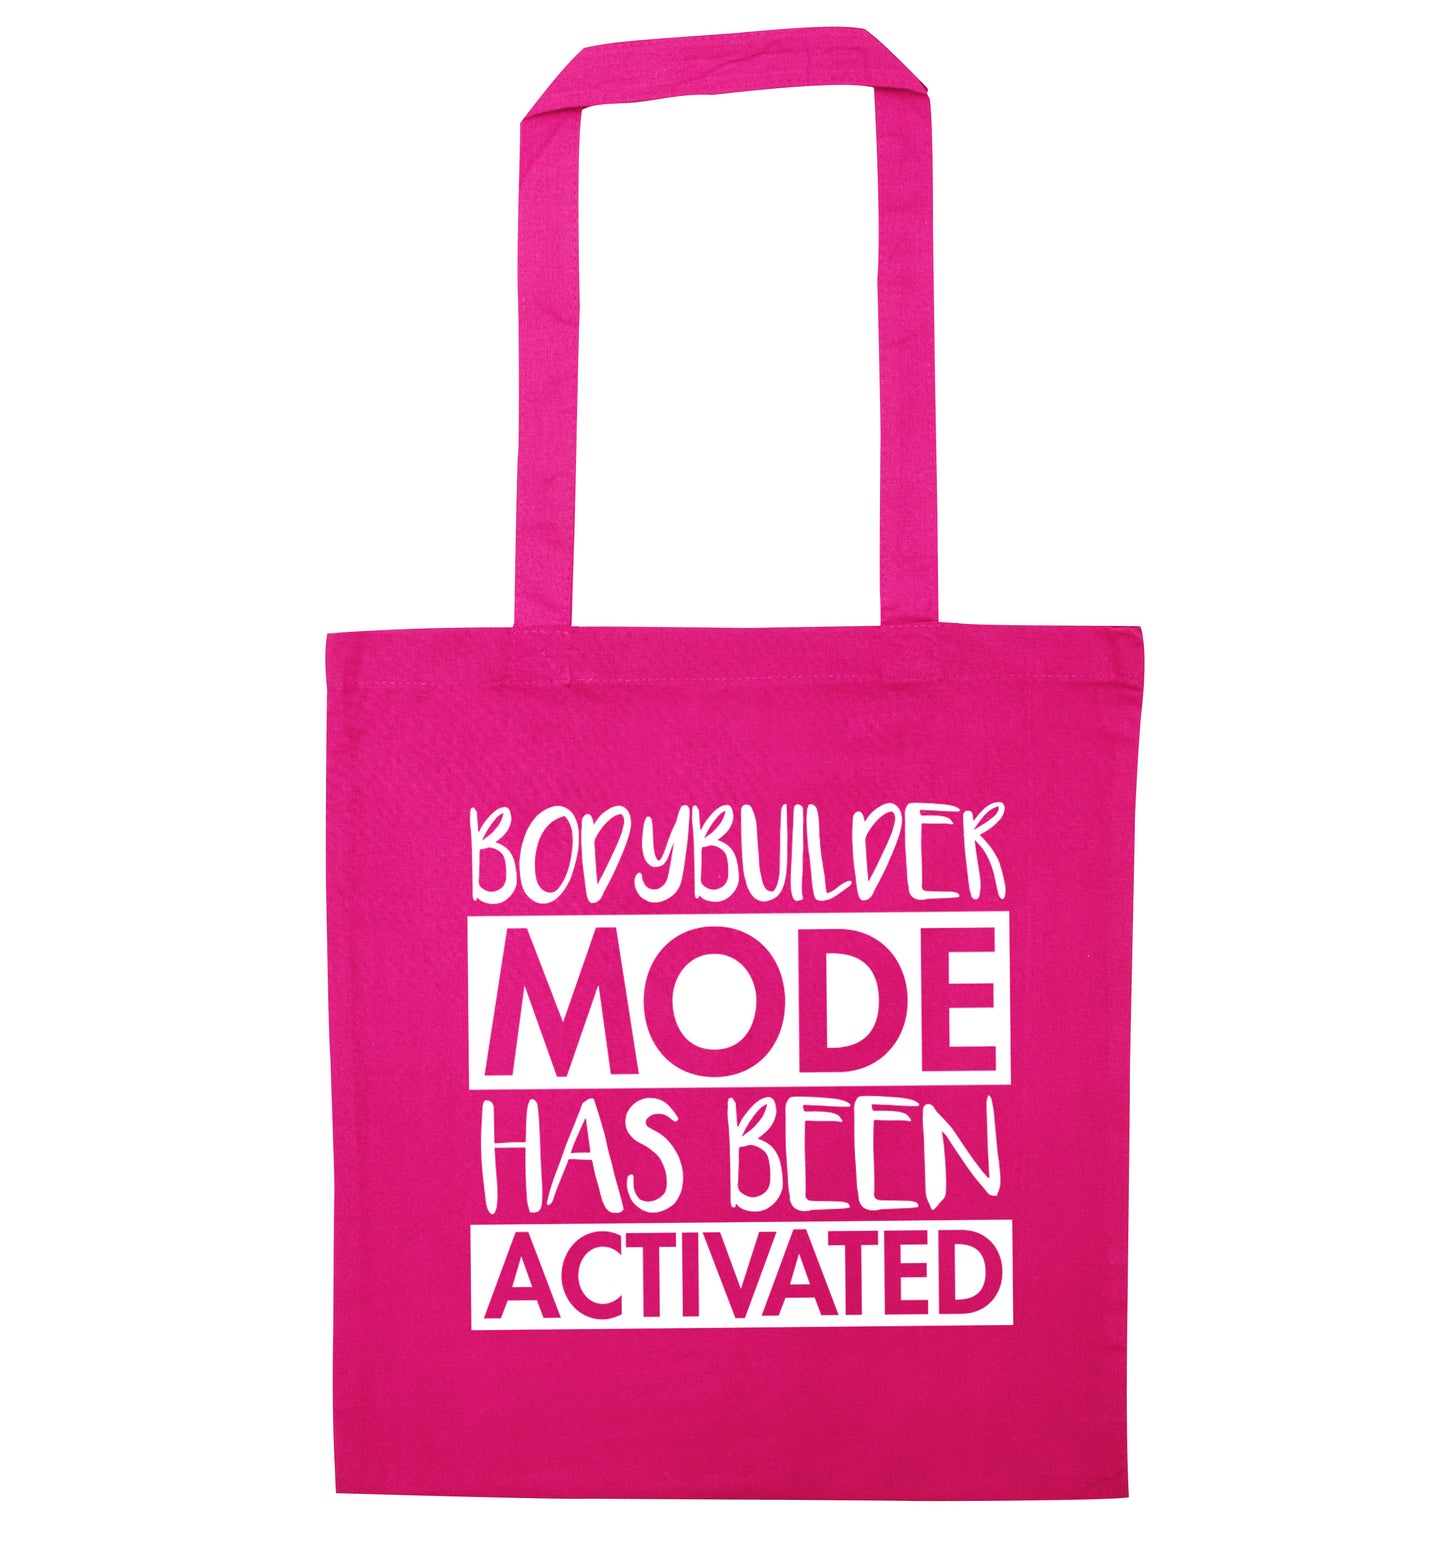 Bodybuilder mode activated pink tote bag